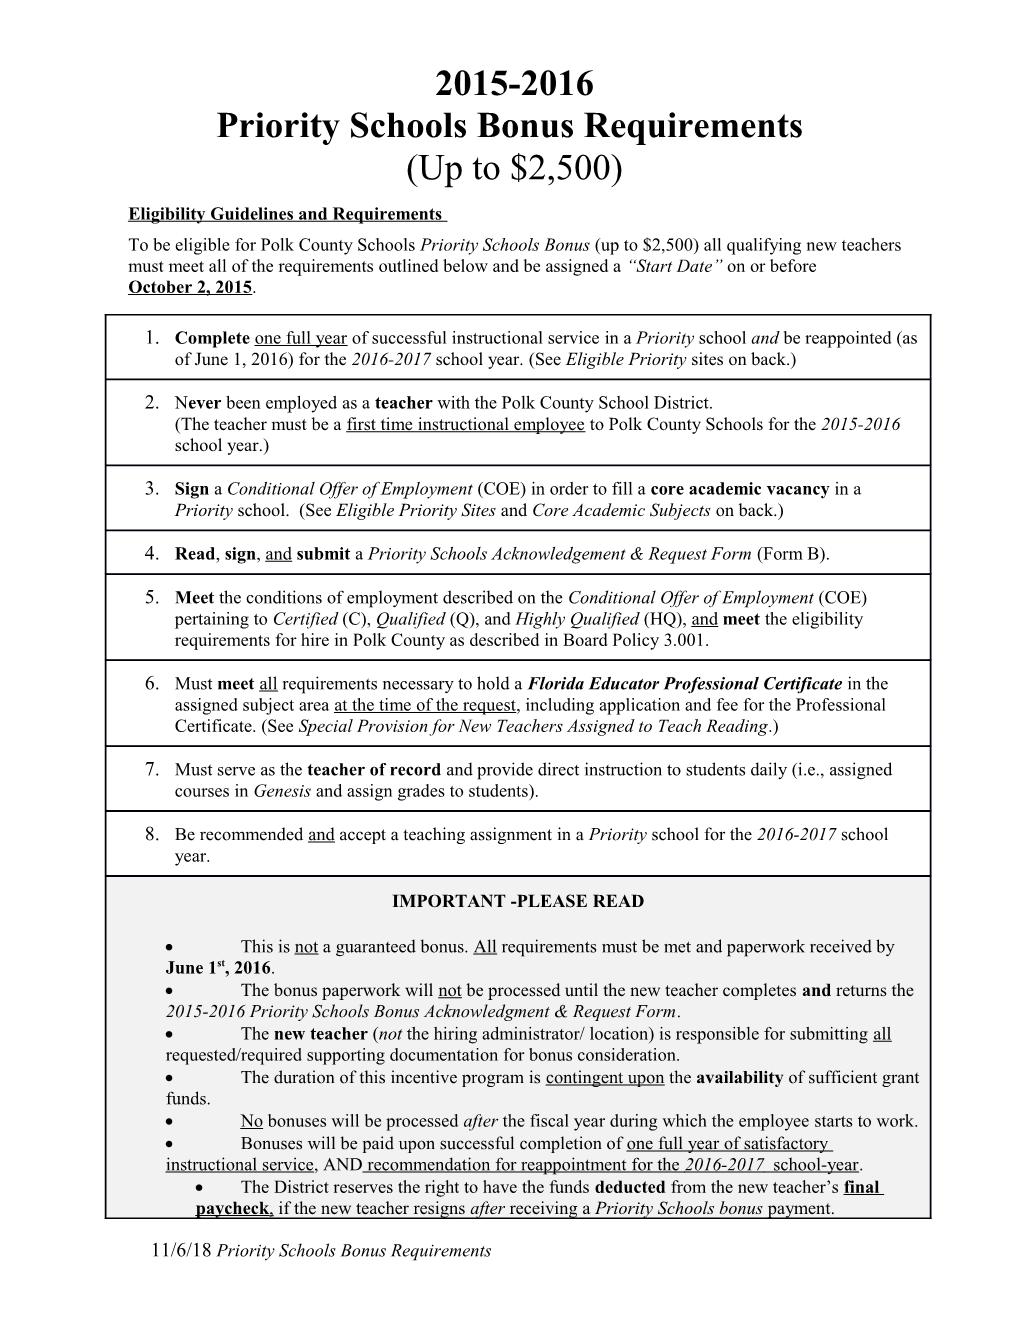 Teacher Relocation Bonus Agreement Form